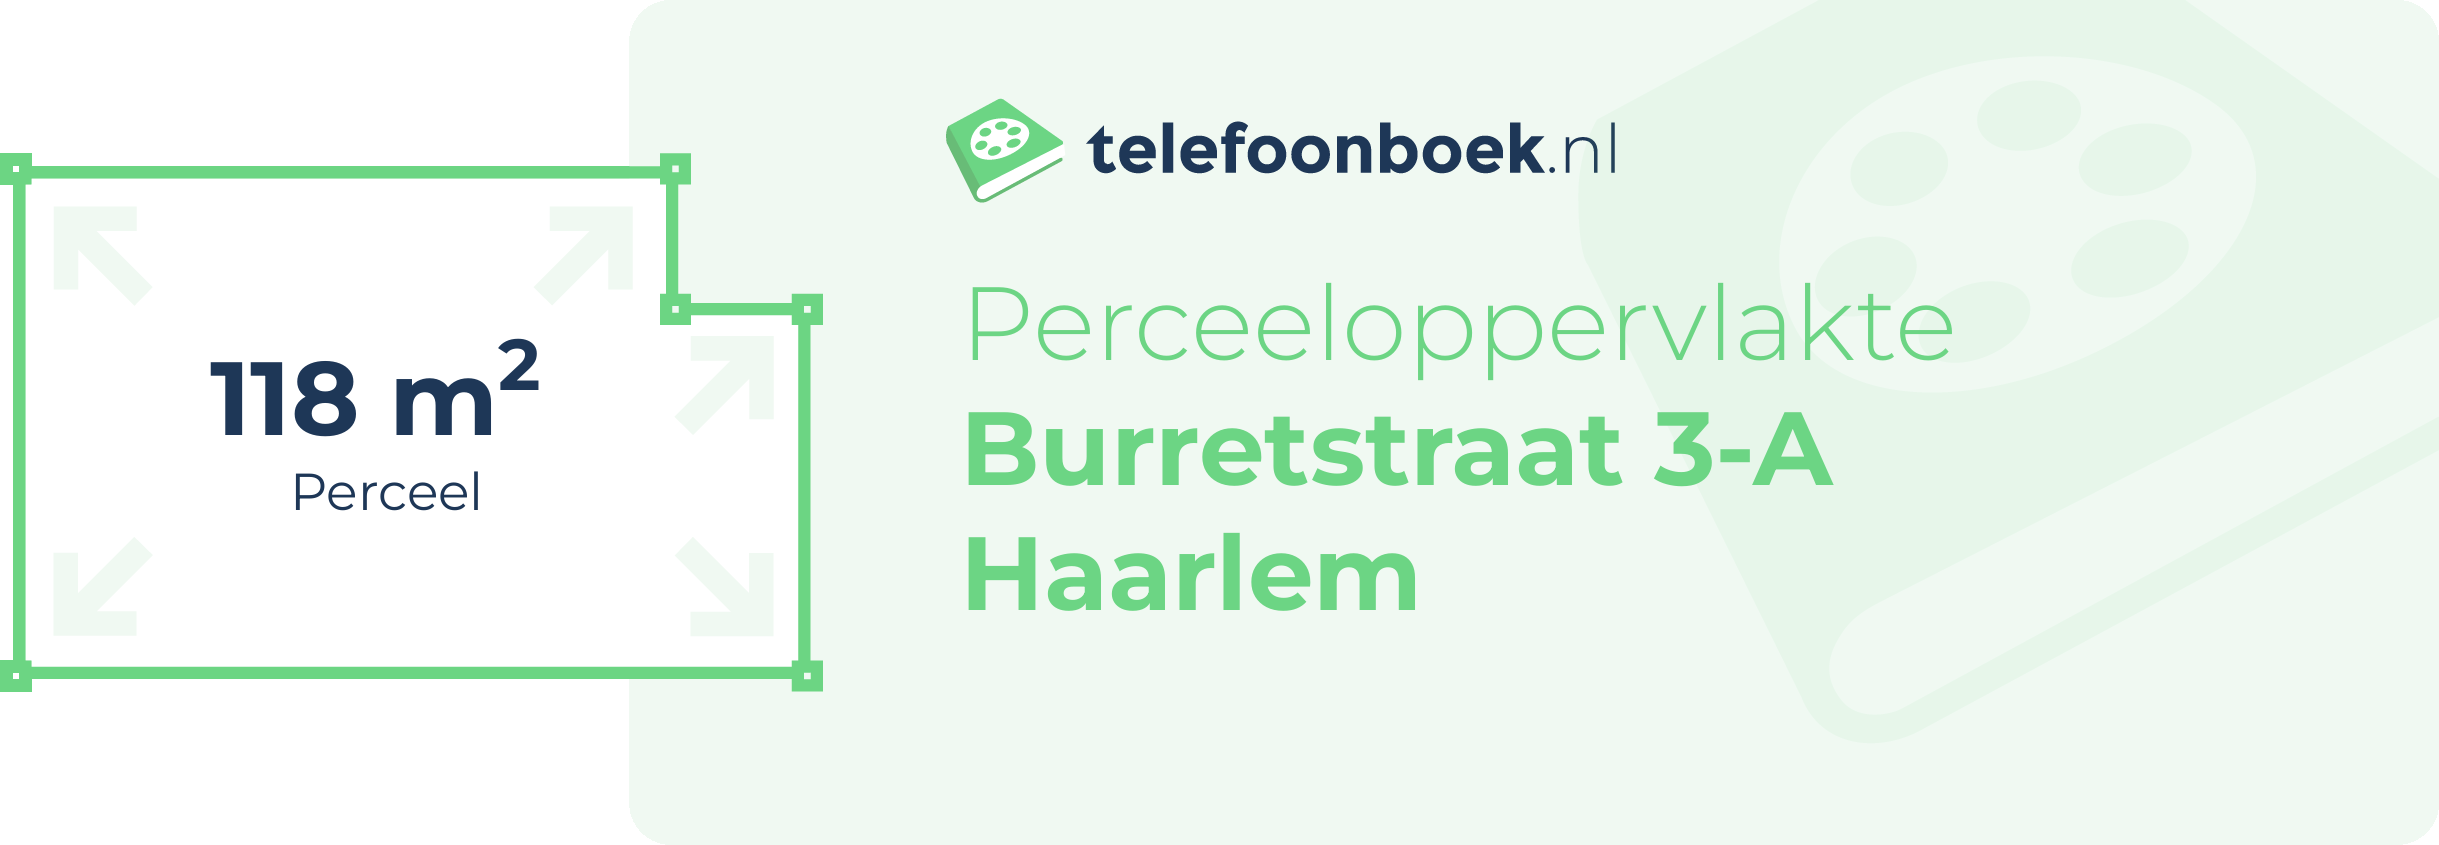 Perceeloppervlakte Burretstraat 3-A Haarlem